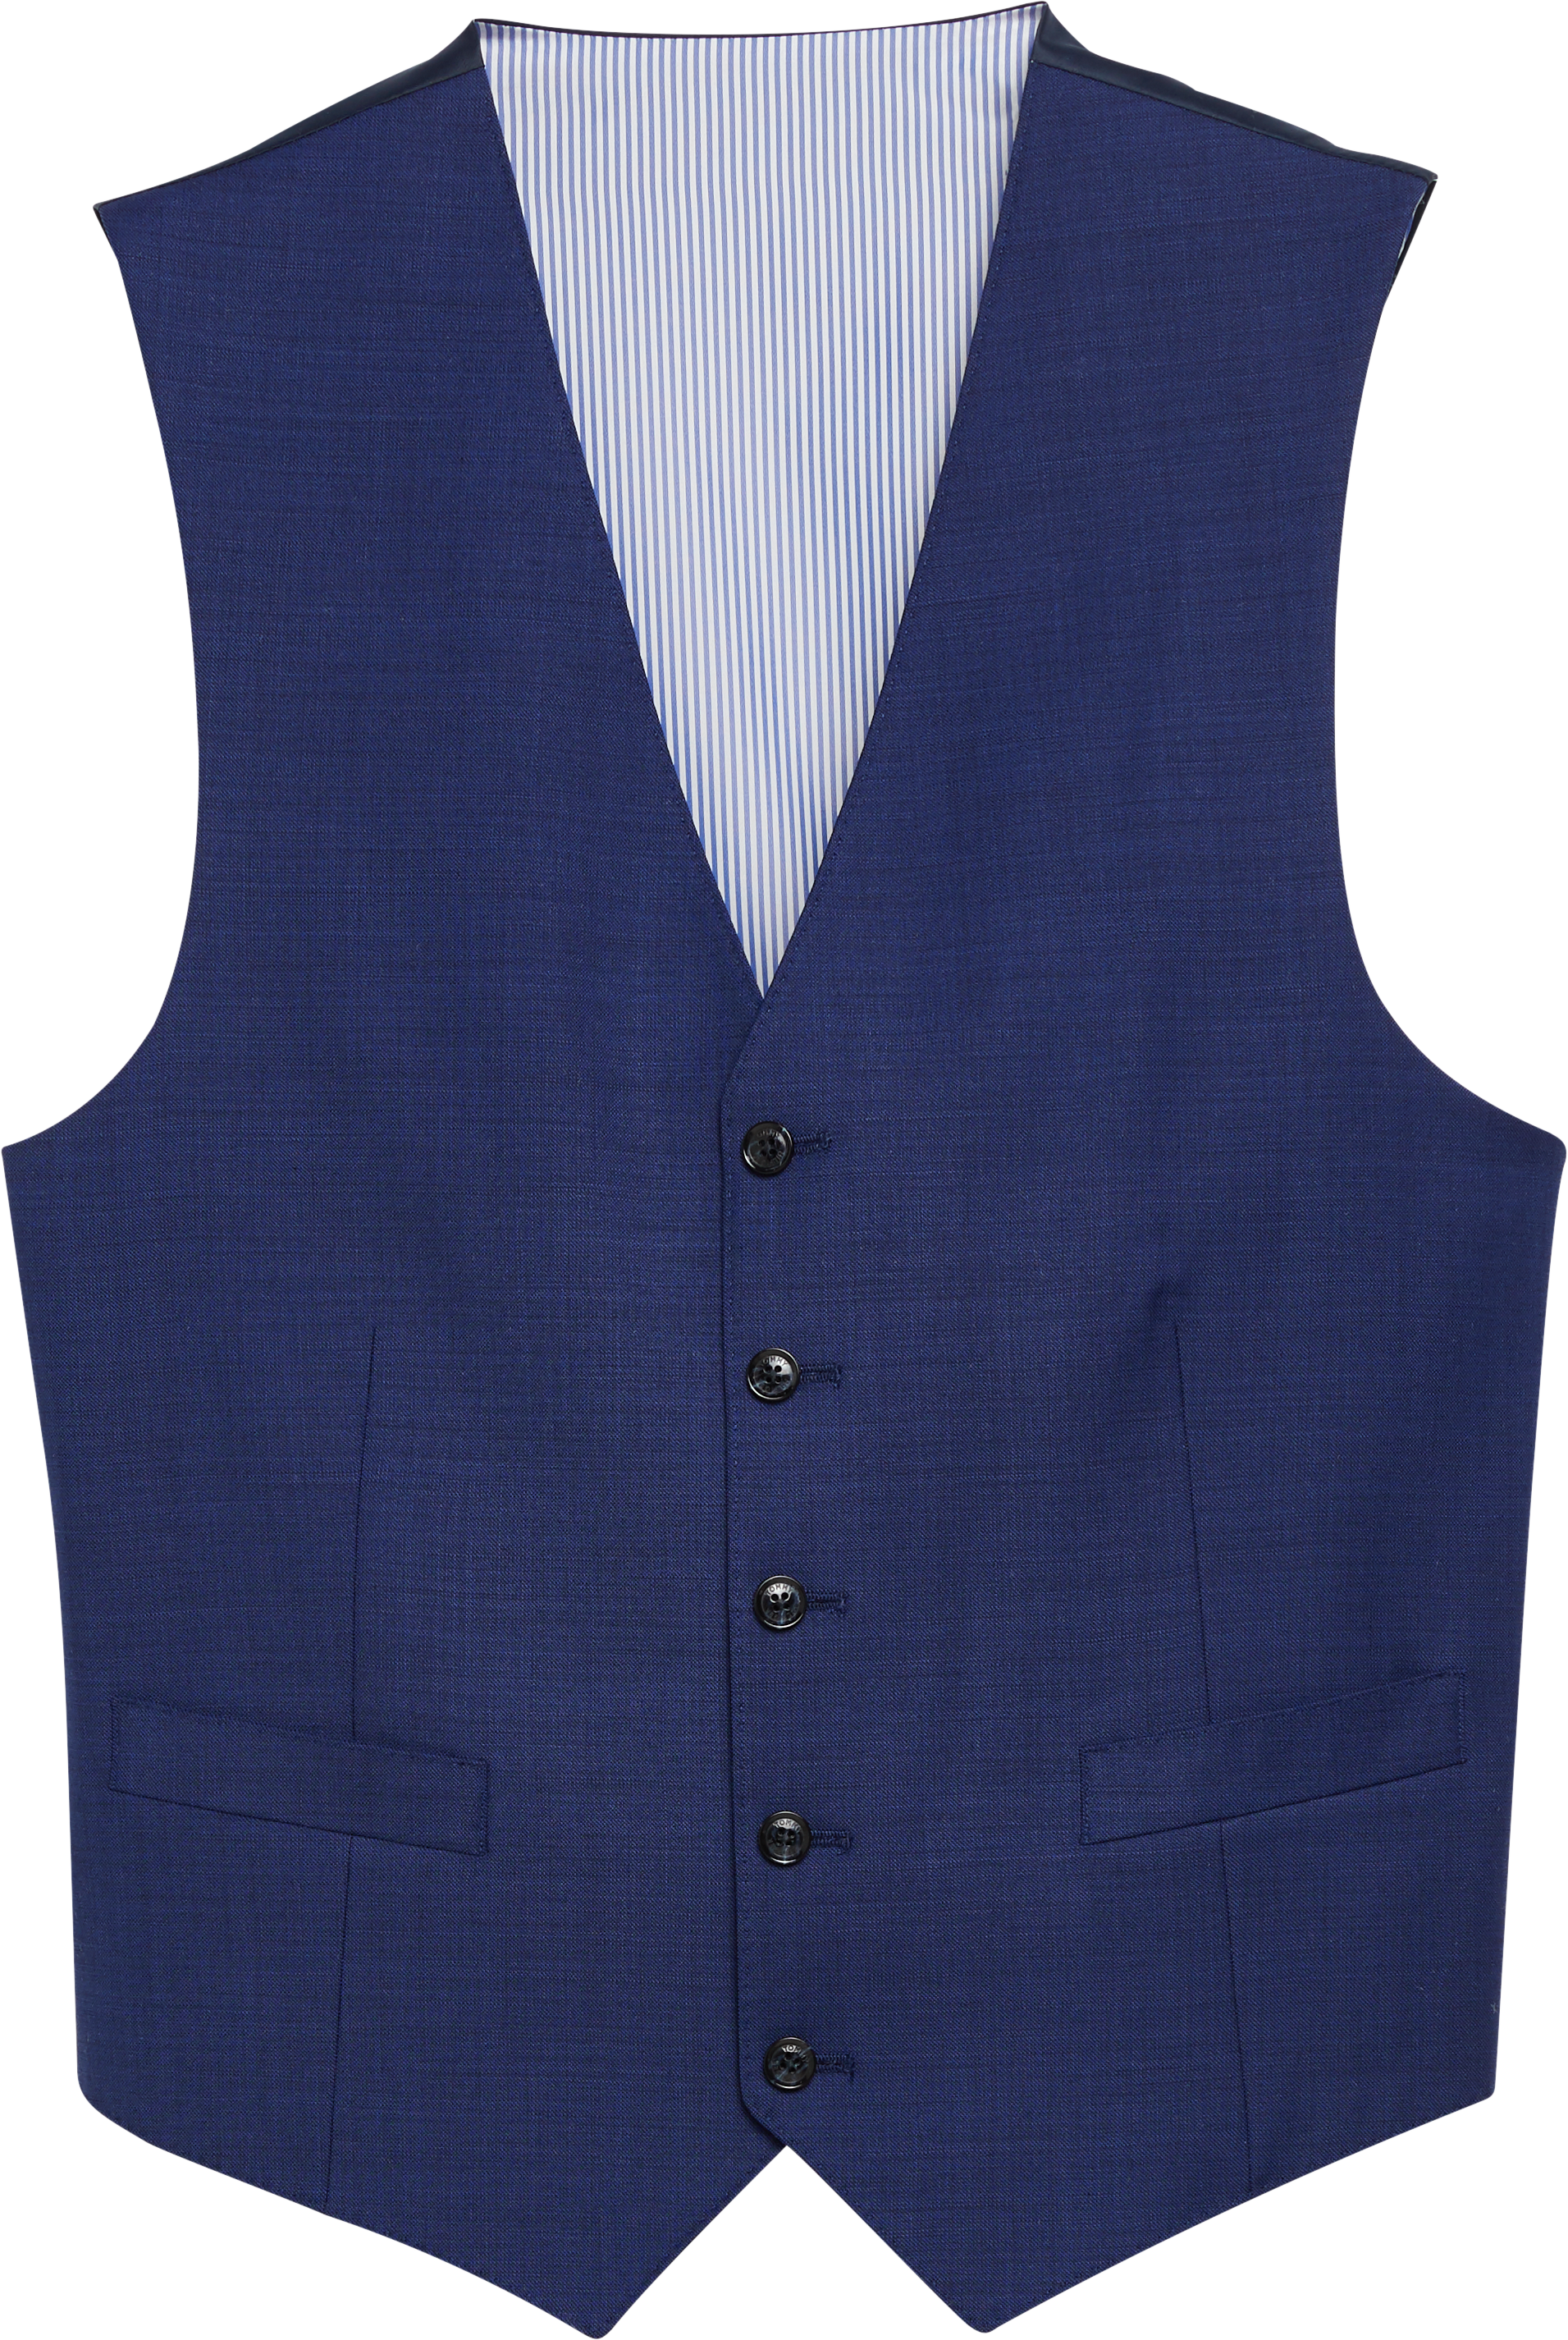 Tommy Hilfiger Modern Fit Suit Separates Vest | Men's Suits & Separates |  Moores Clothing